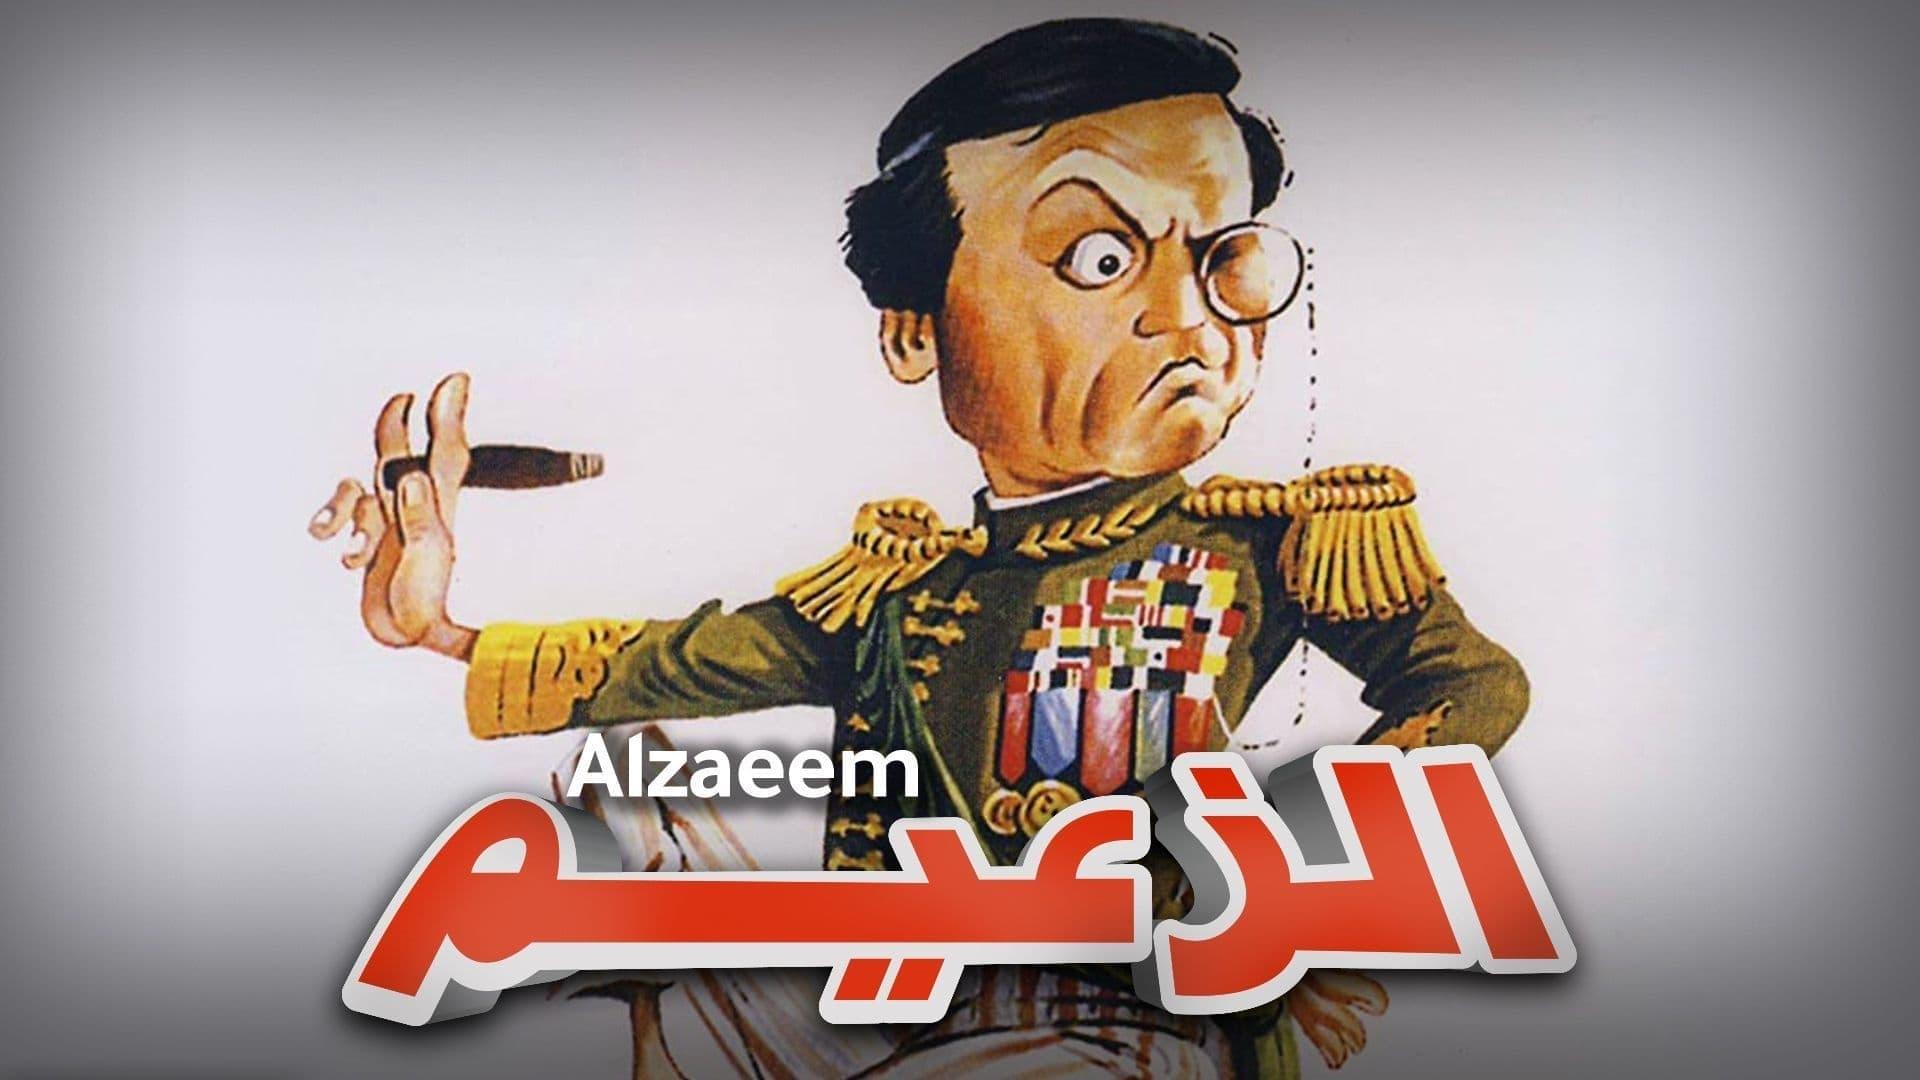 Al Zaeem backdrop